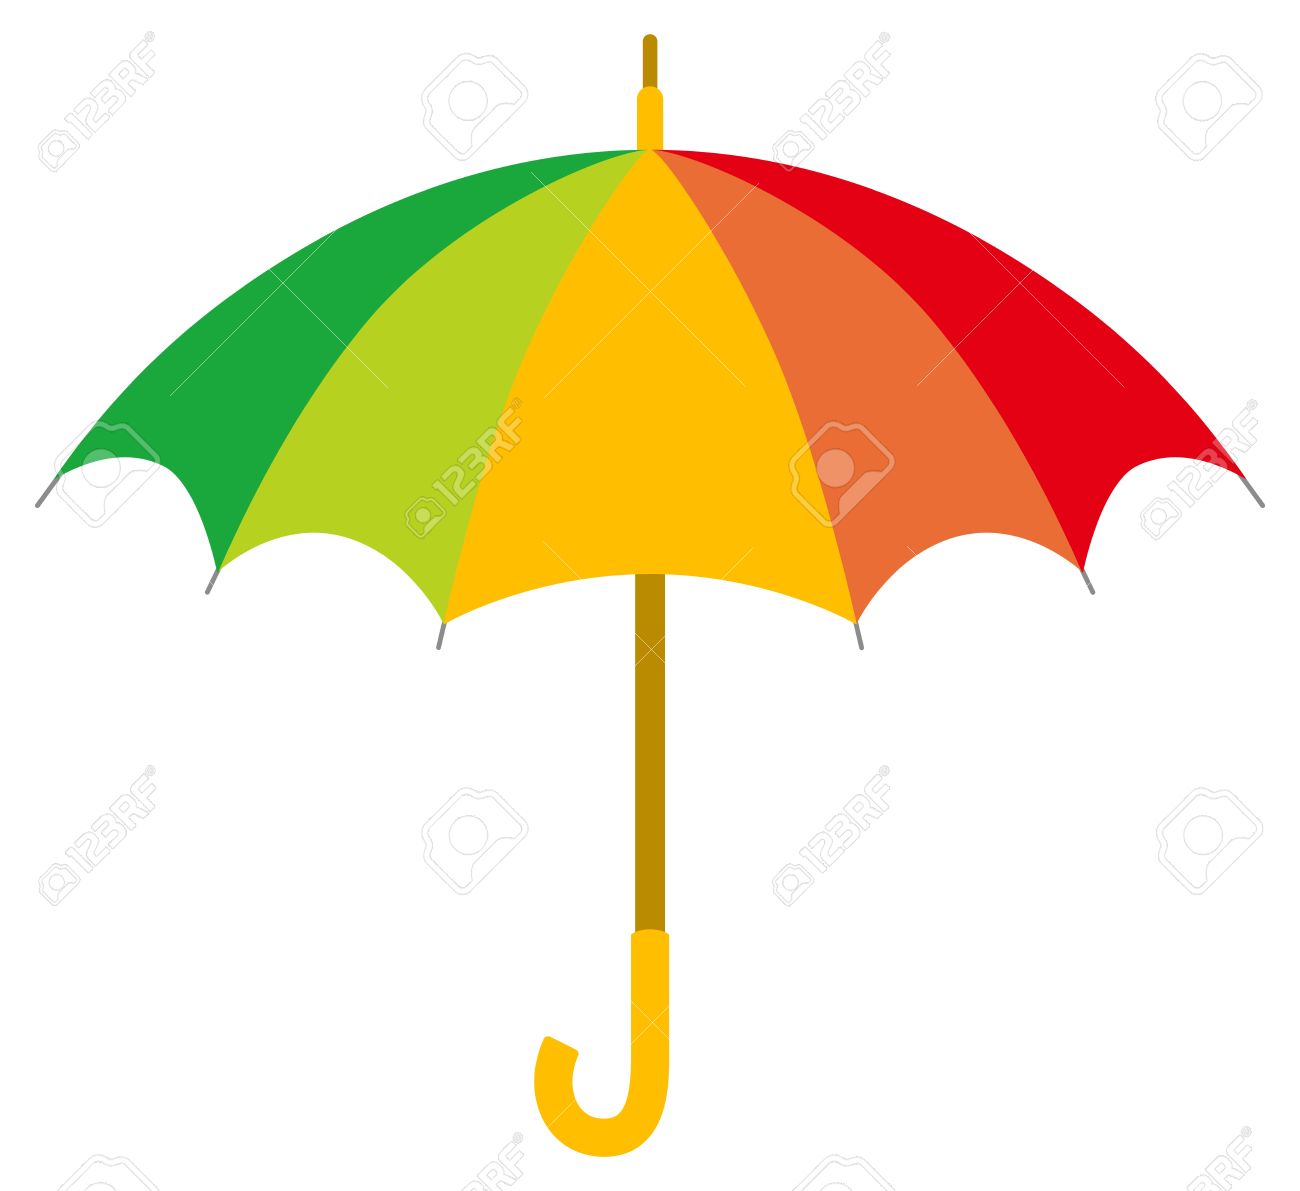 rainbow umbrella clip art - photo #43